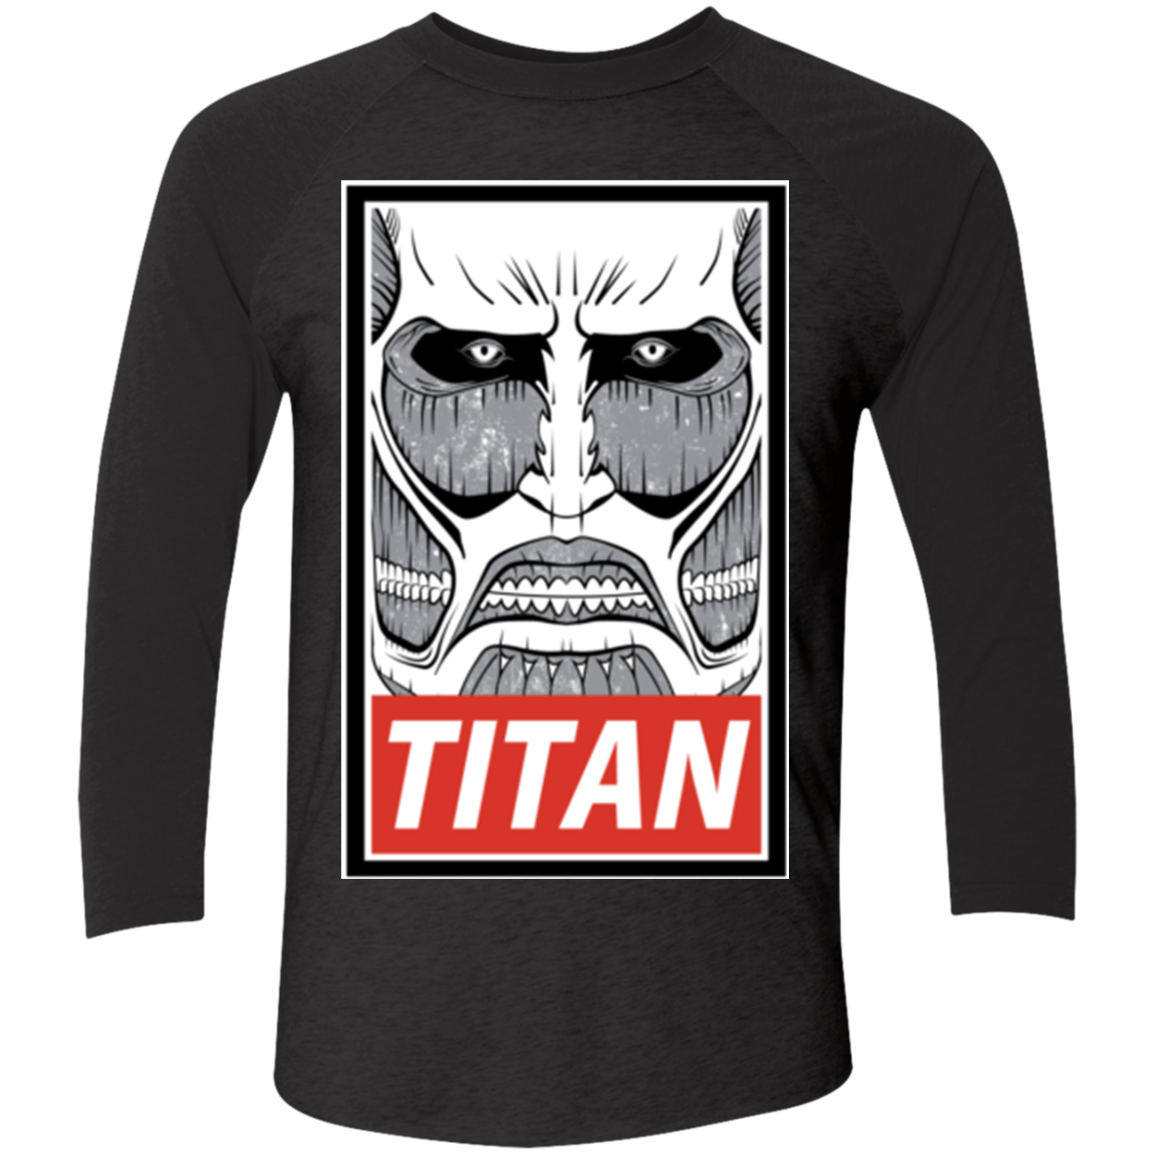 Titan Triblend 3/4 Sleeve